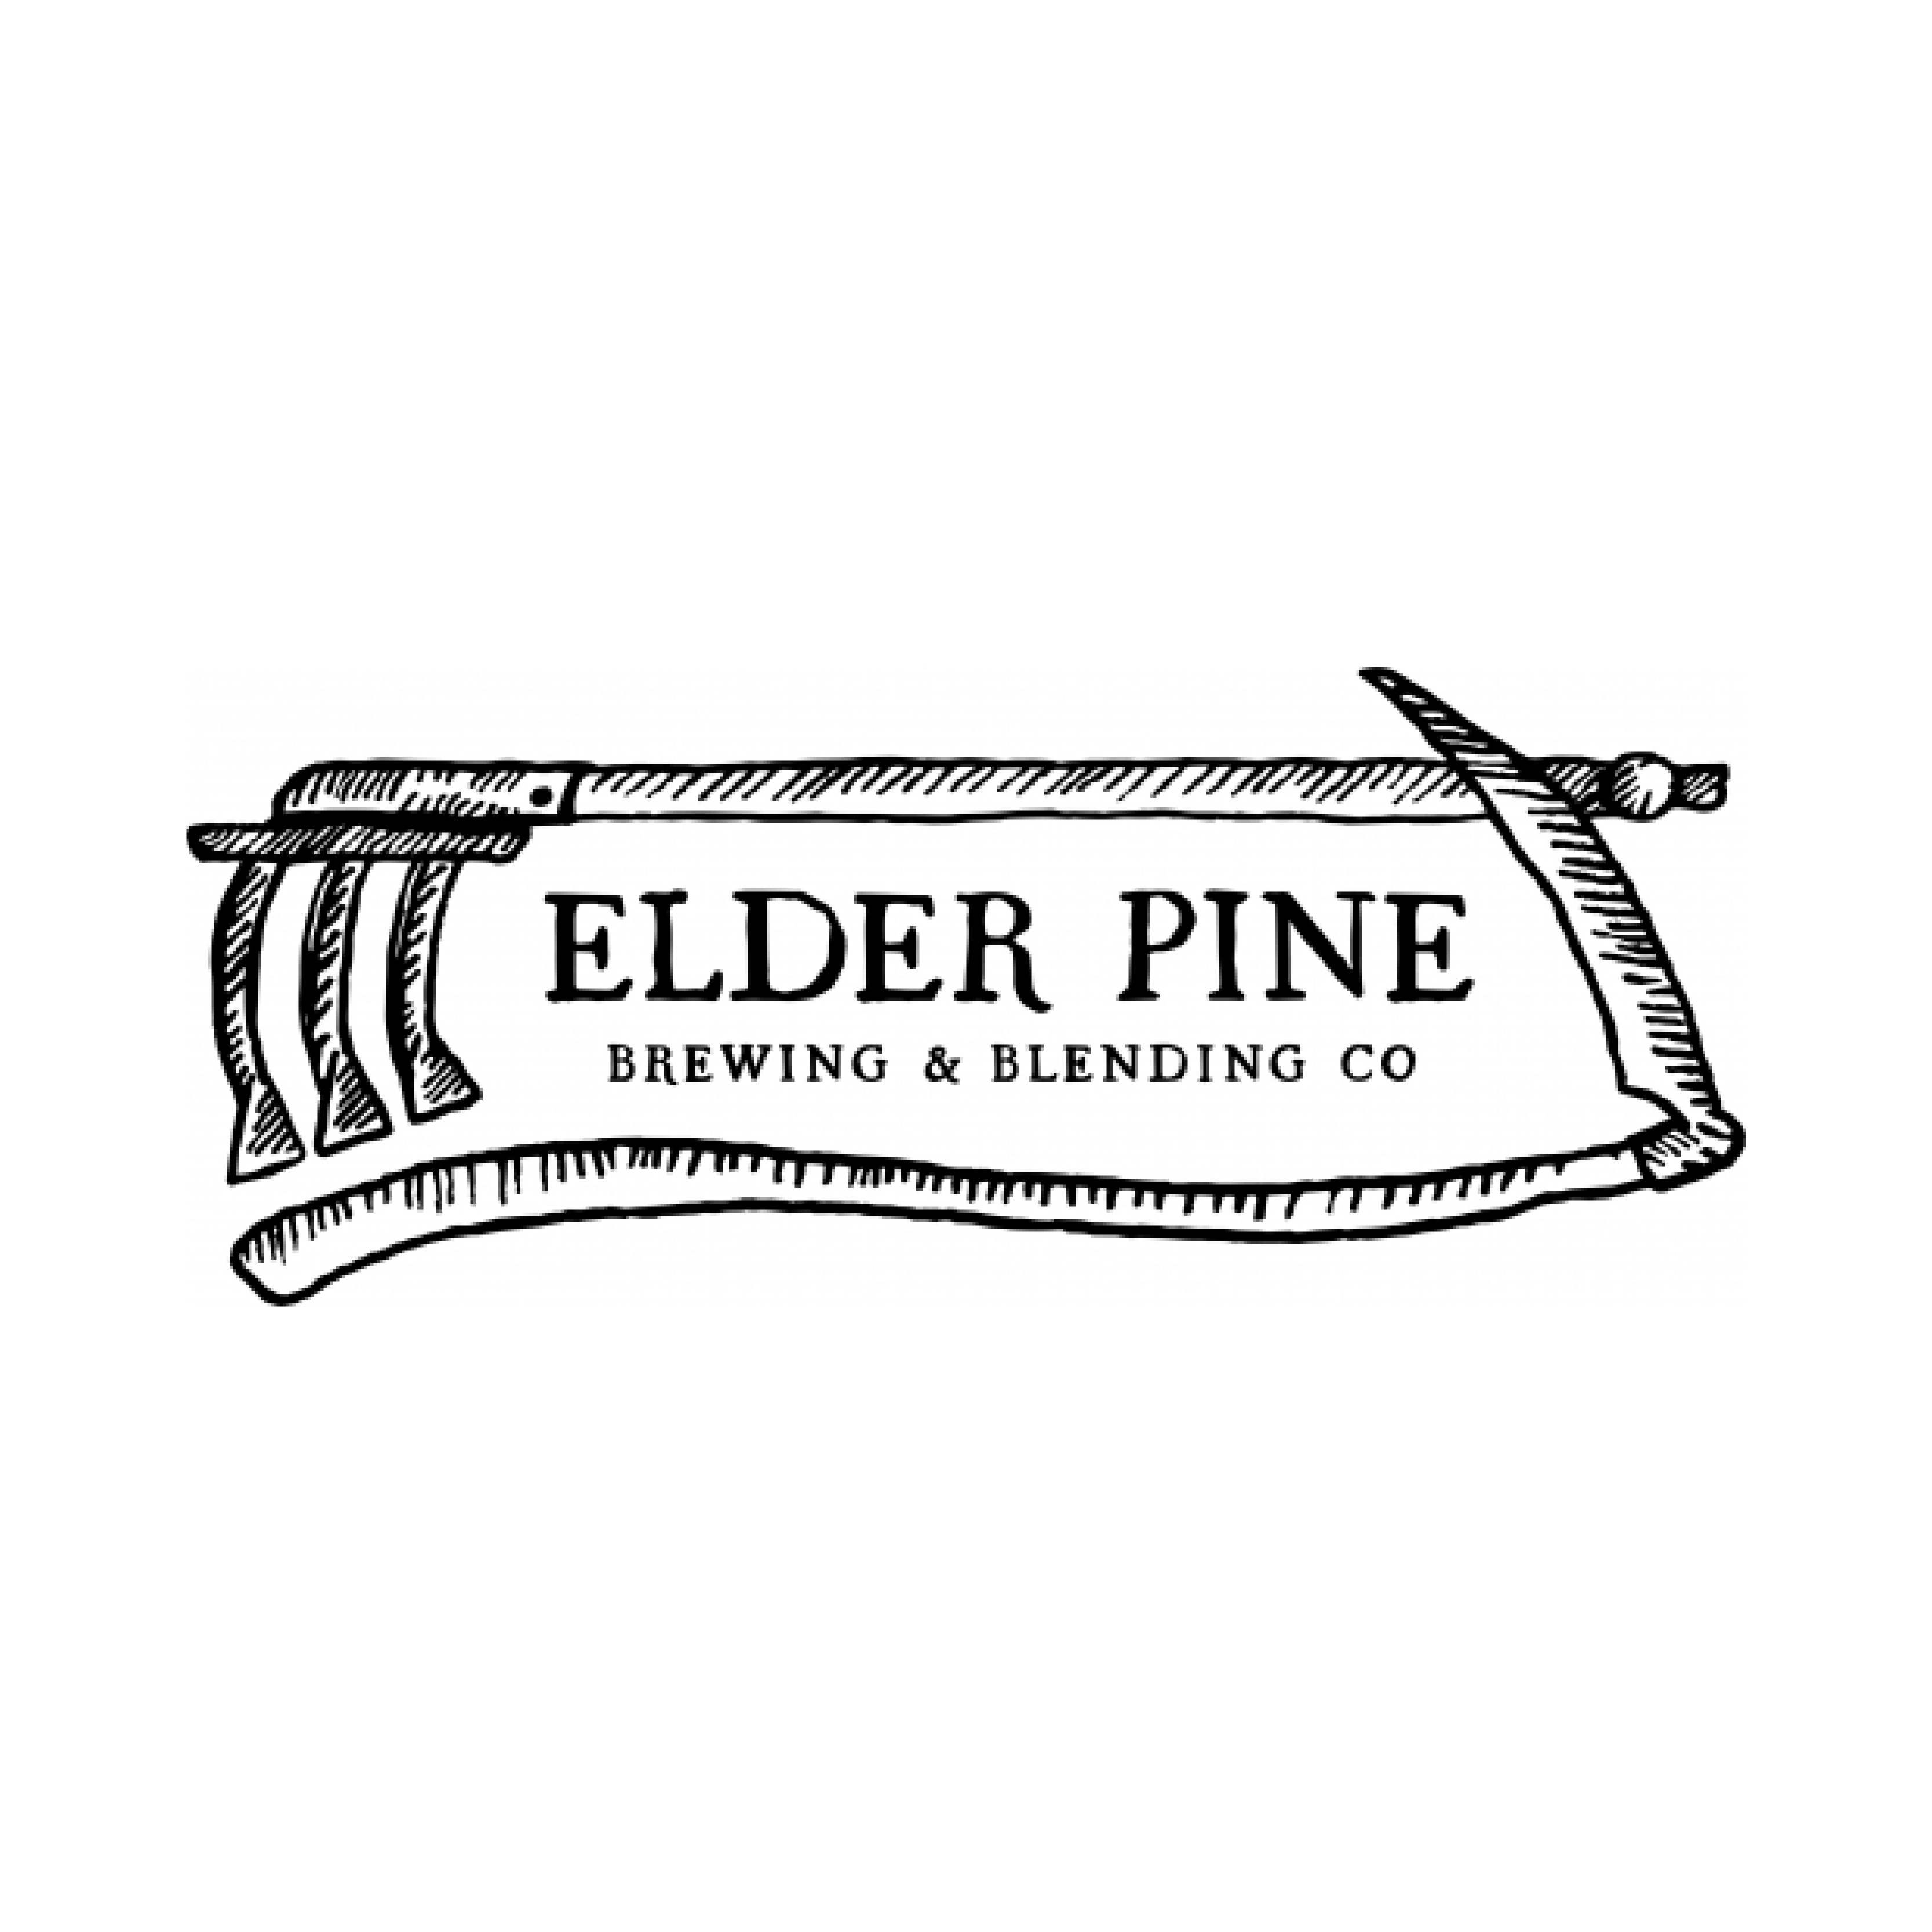 Elder Pine